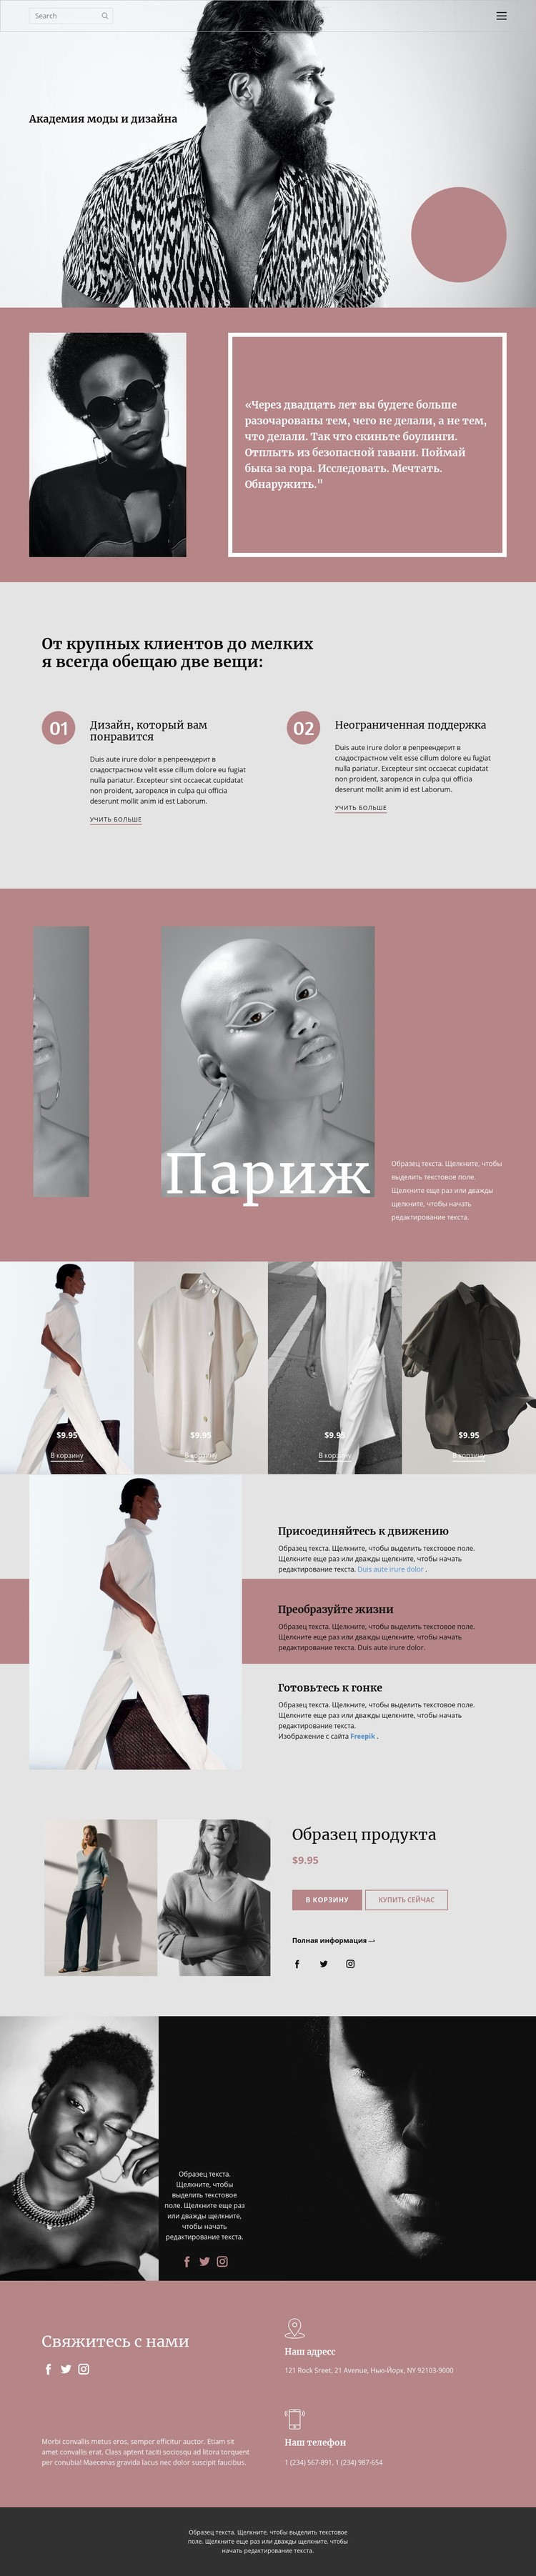 Студия моды Шаблоны конструктора веб-сайтов